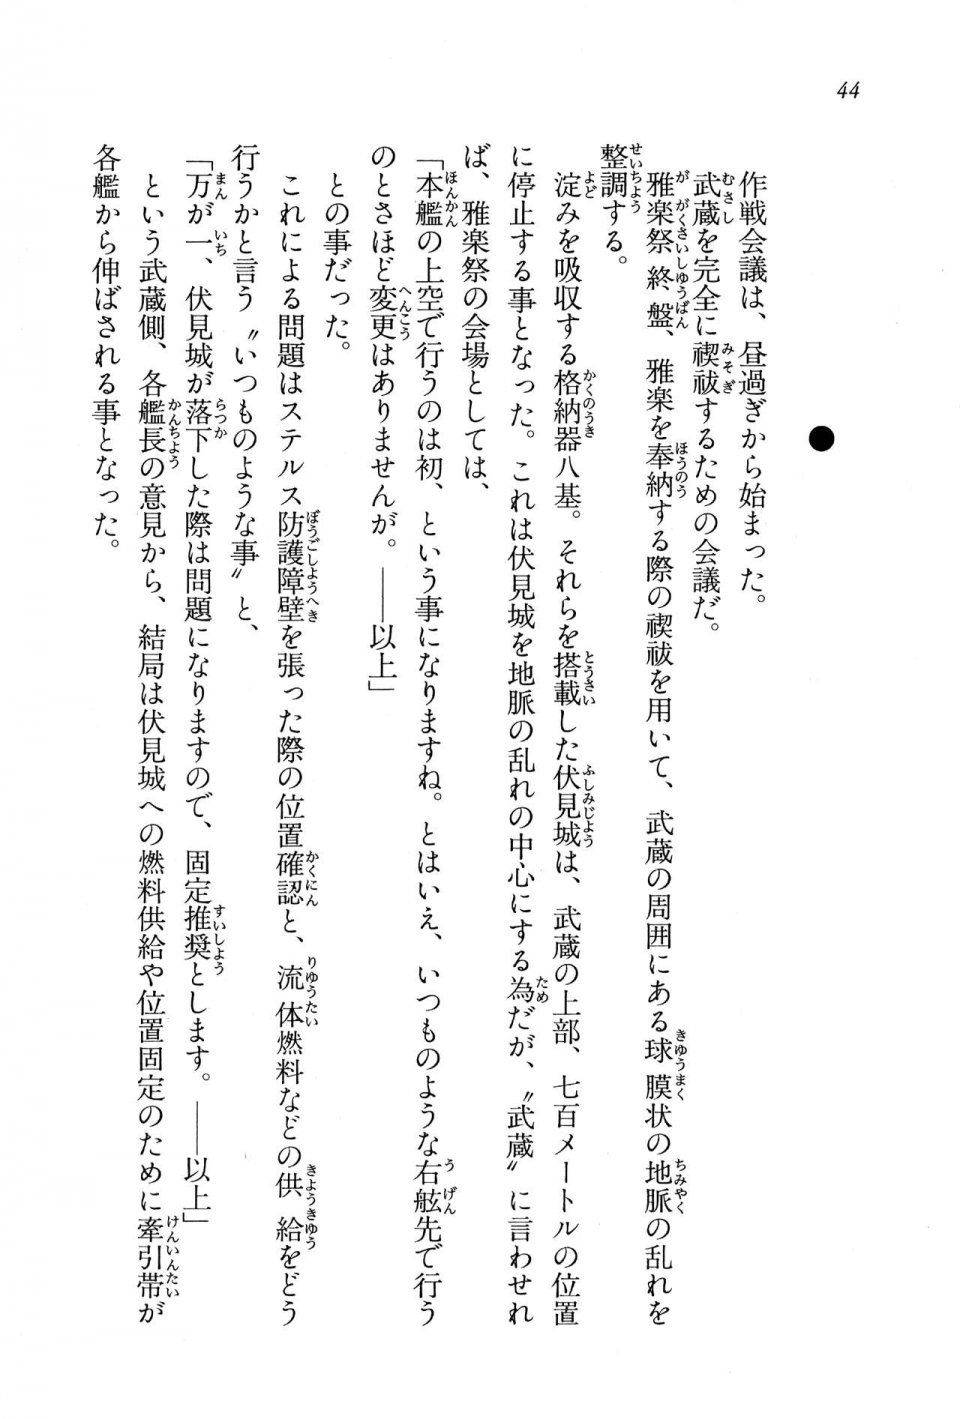 Kyoukai Senjou no Horizon BD Special Mininovel Vol 8(4B) - Photo #48